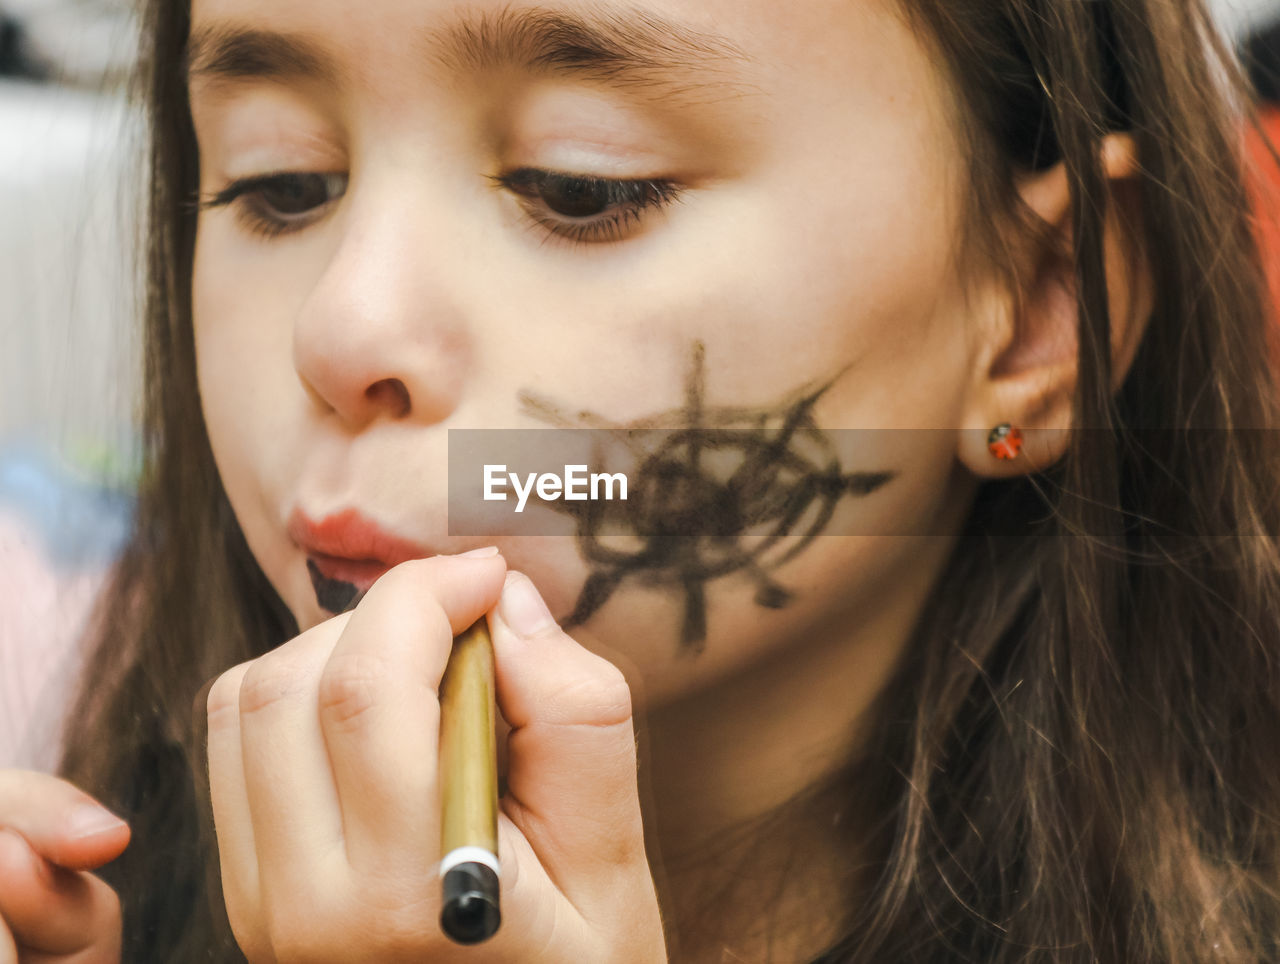 Little girl puts on halloween makeup.